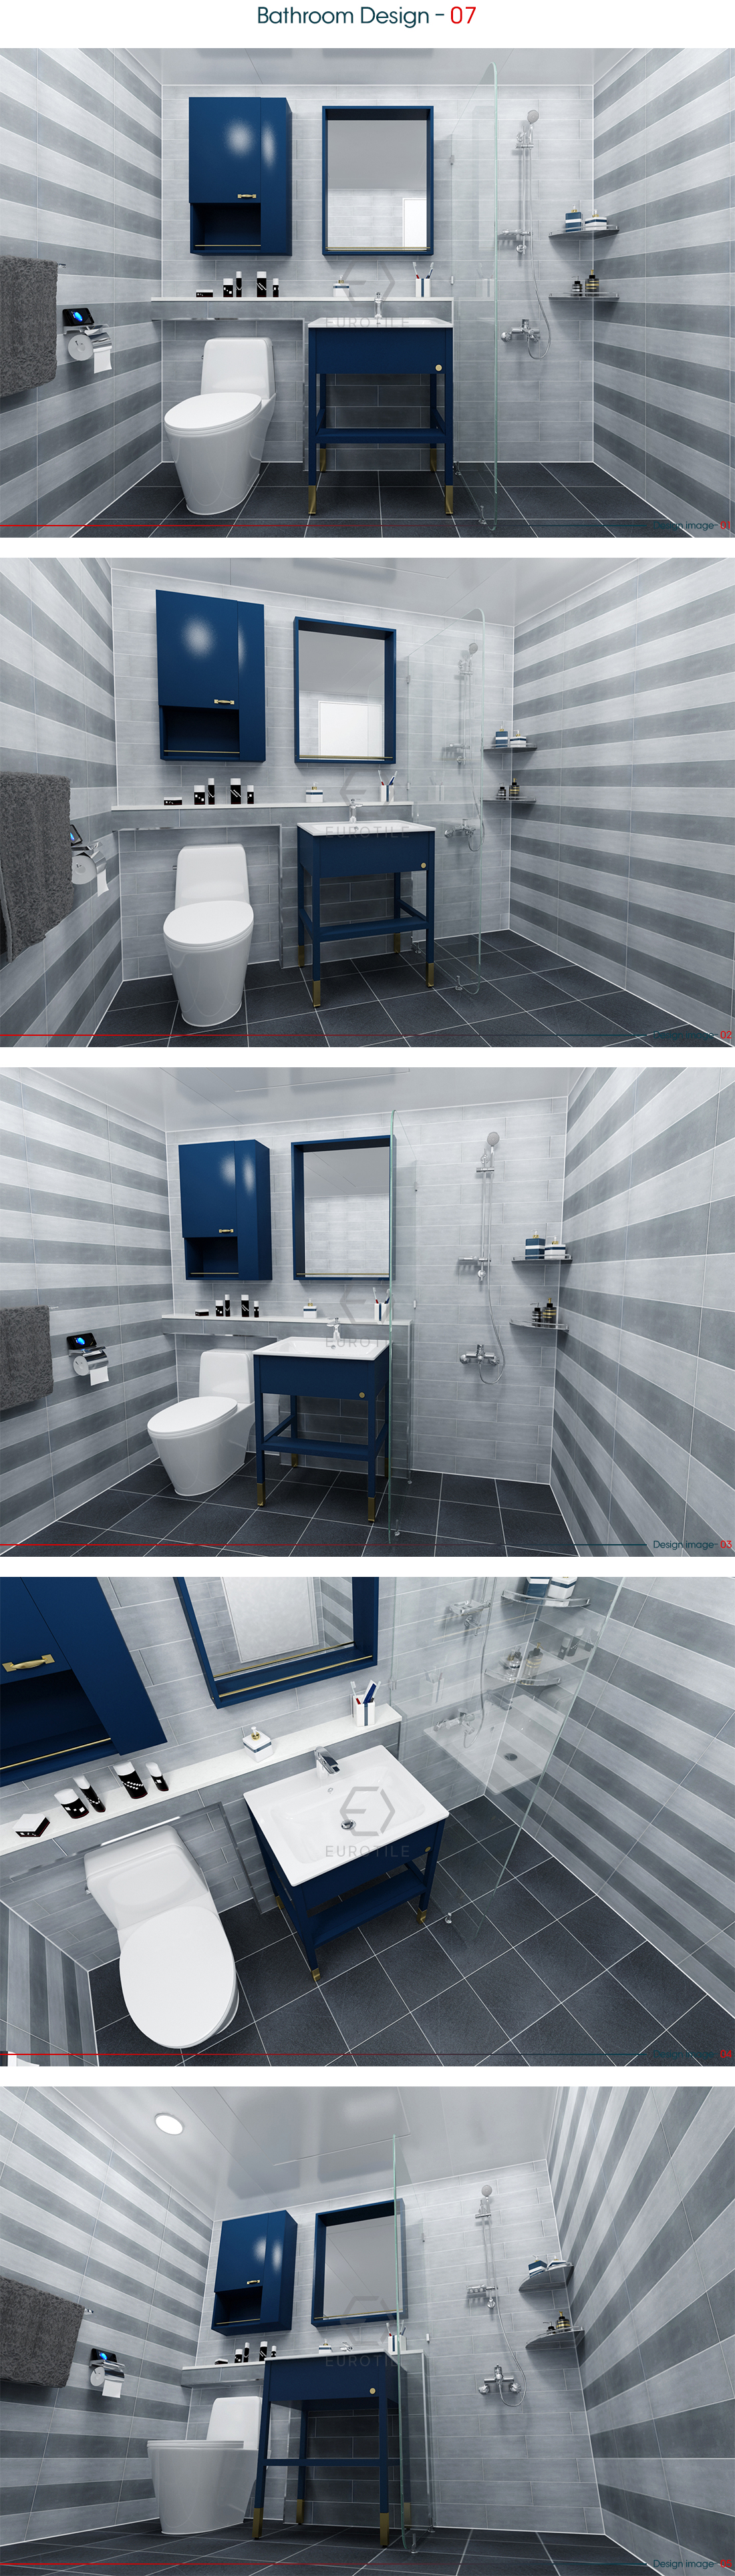 bathroomdesign-07_110307.jpg